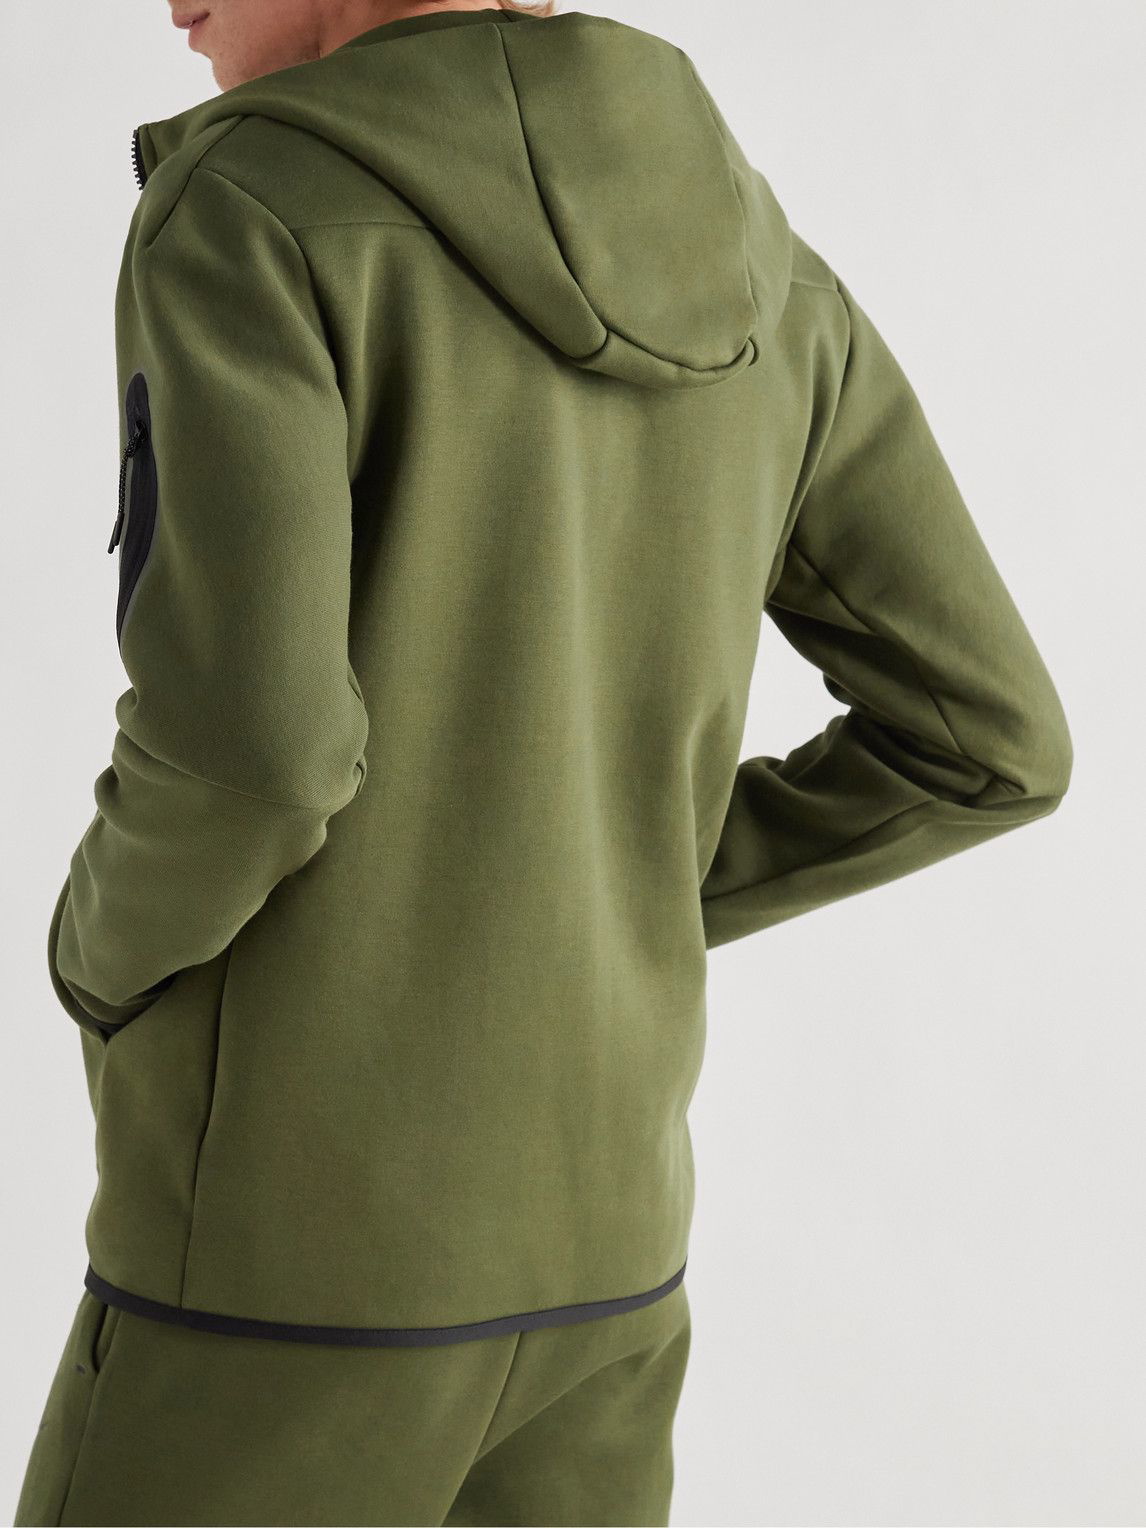 Nike Tech Fleece zip up hoodie in stone and brown